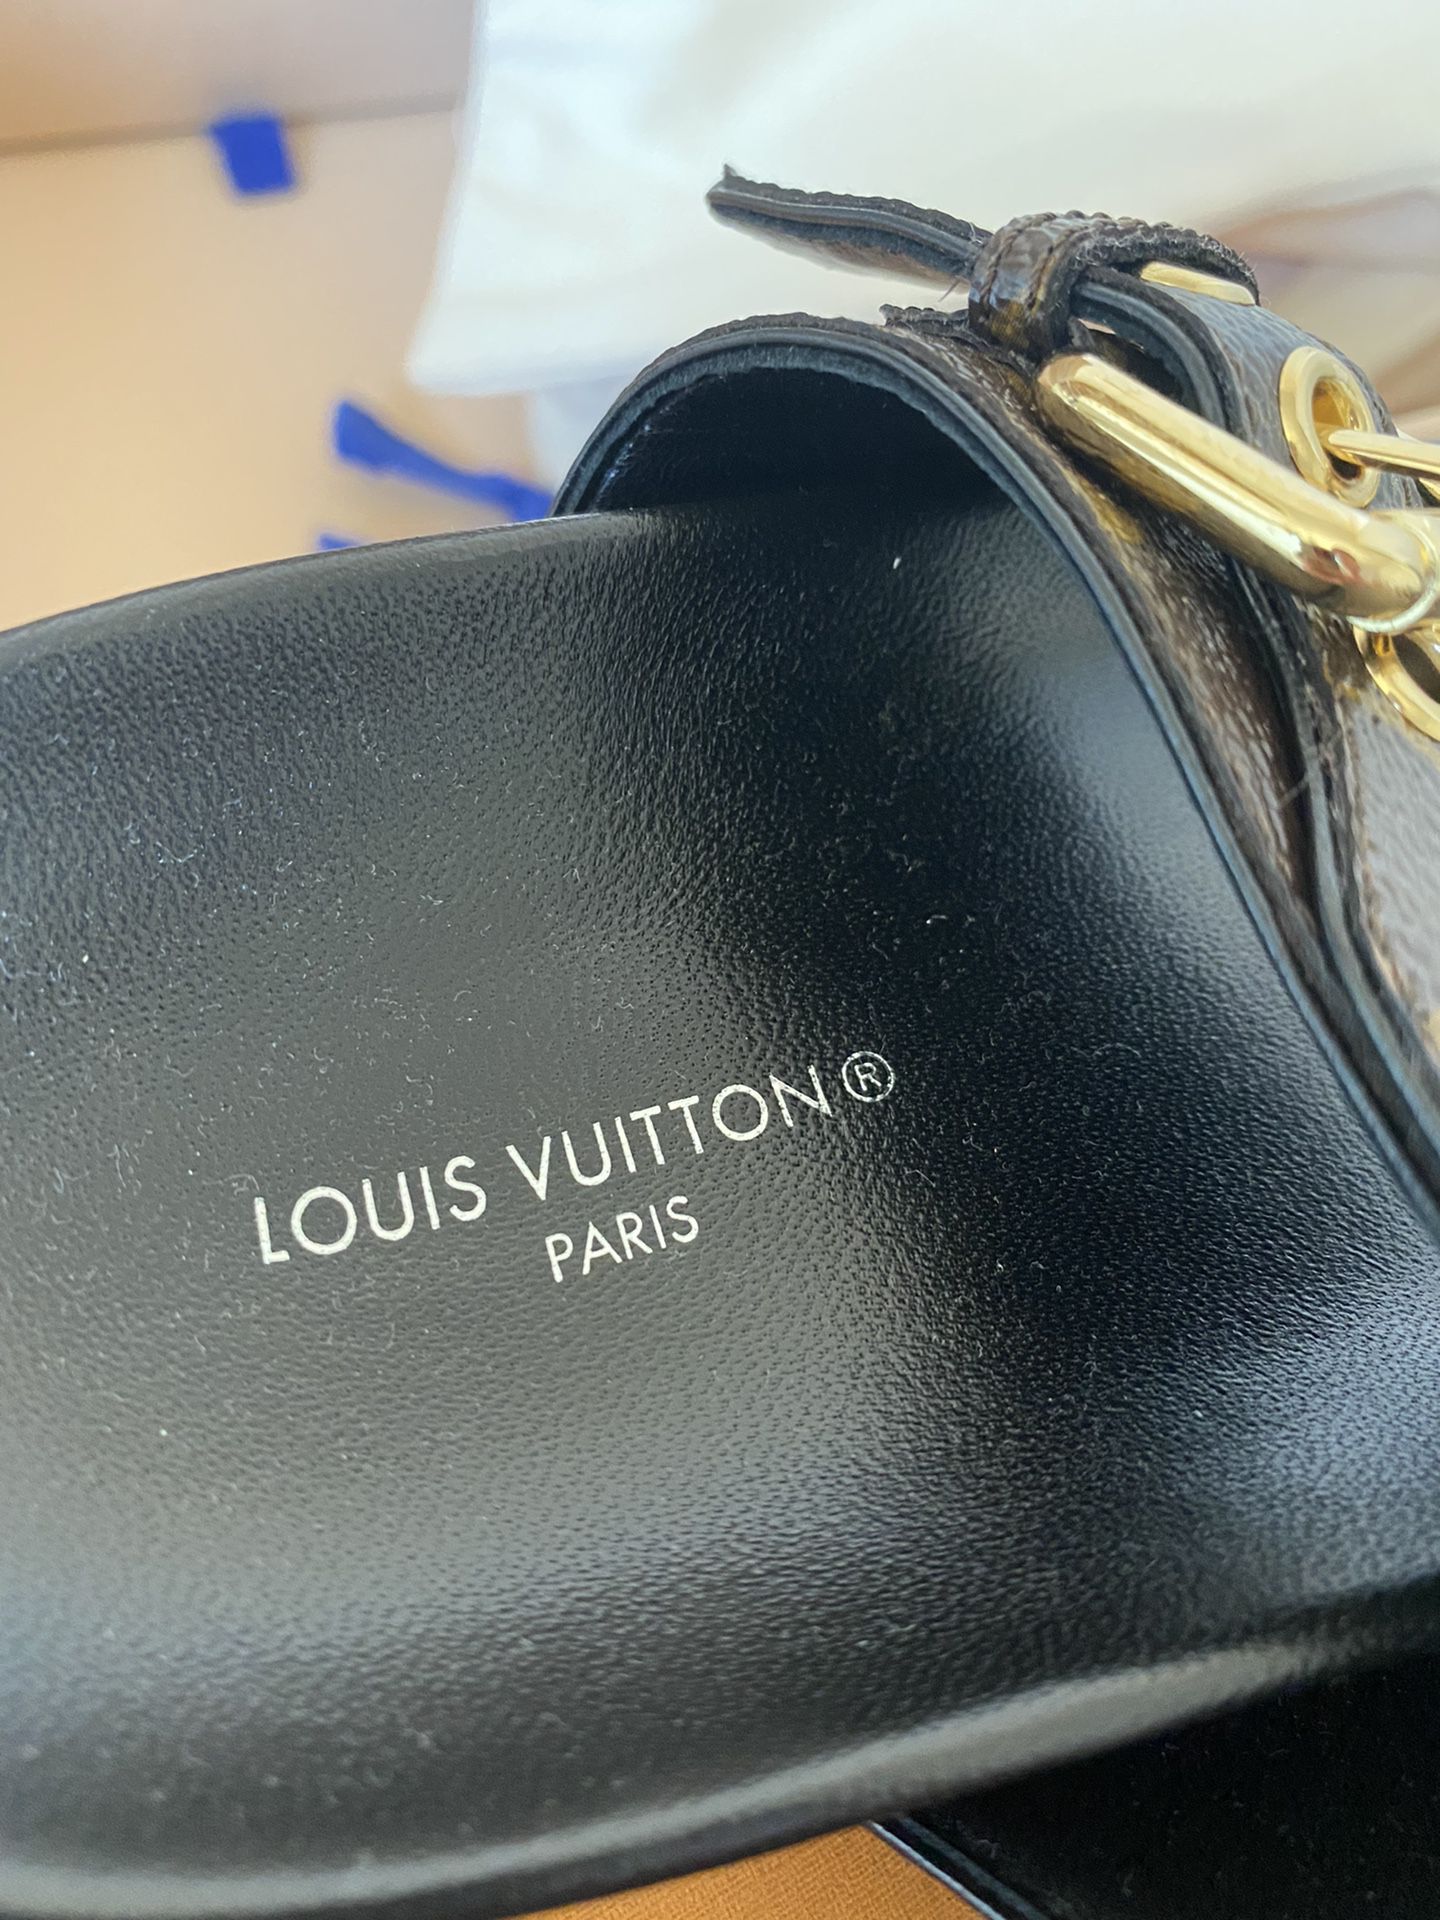 LV Louis Vuitton Bom Dia Flat Comfort Mule Sandals for Sale in City